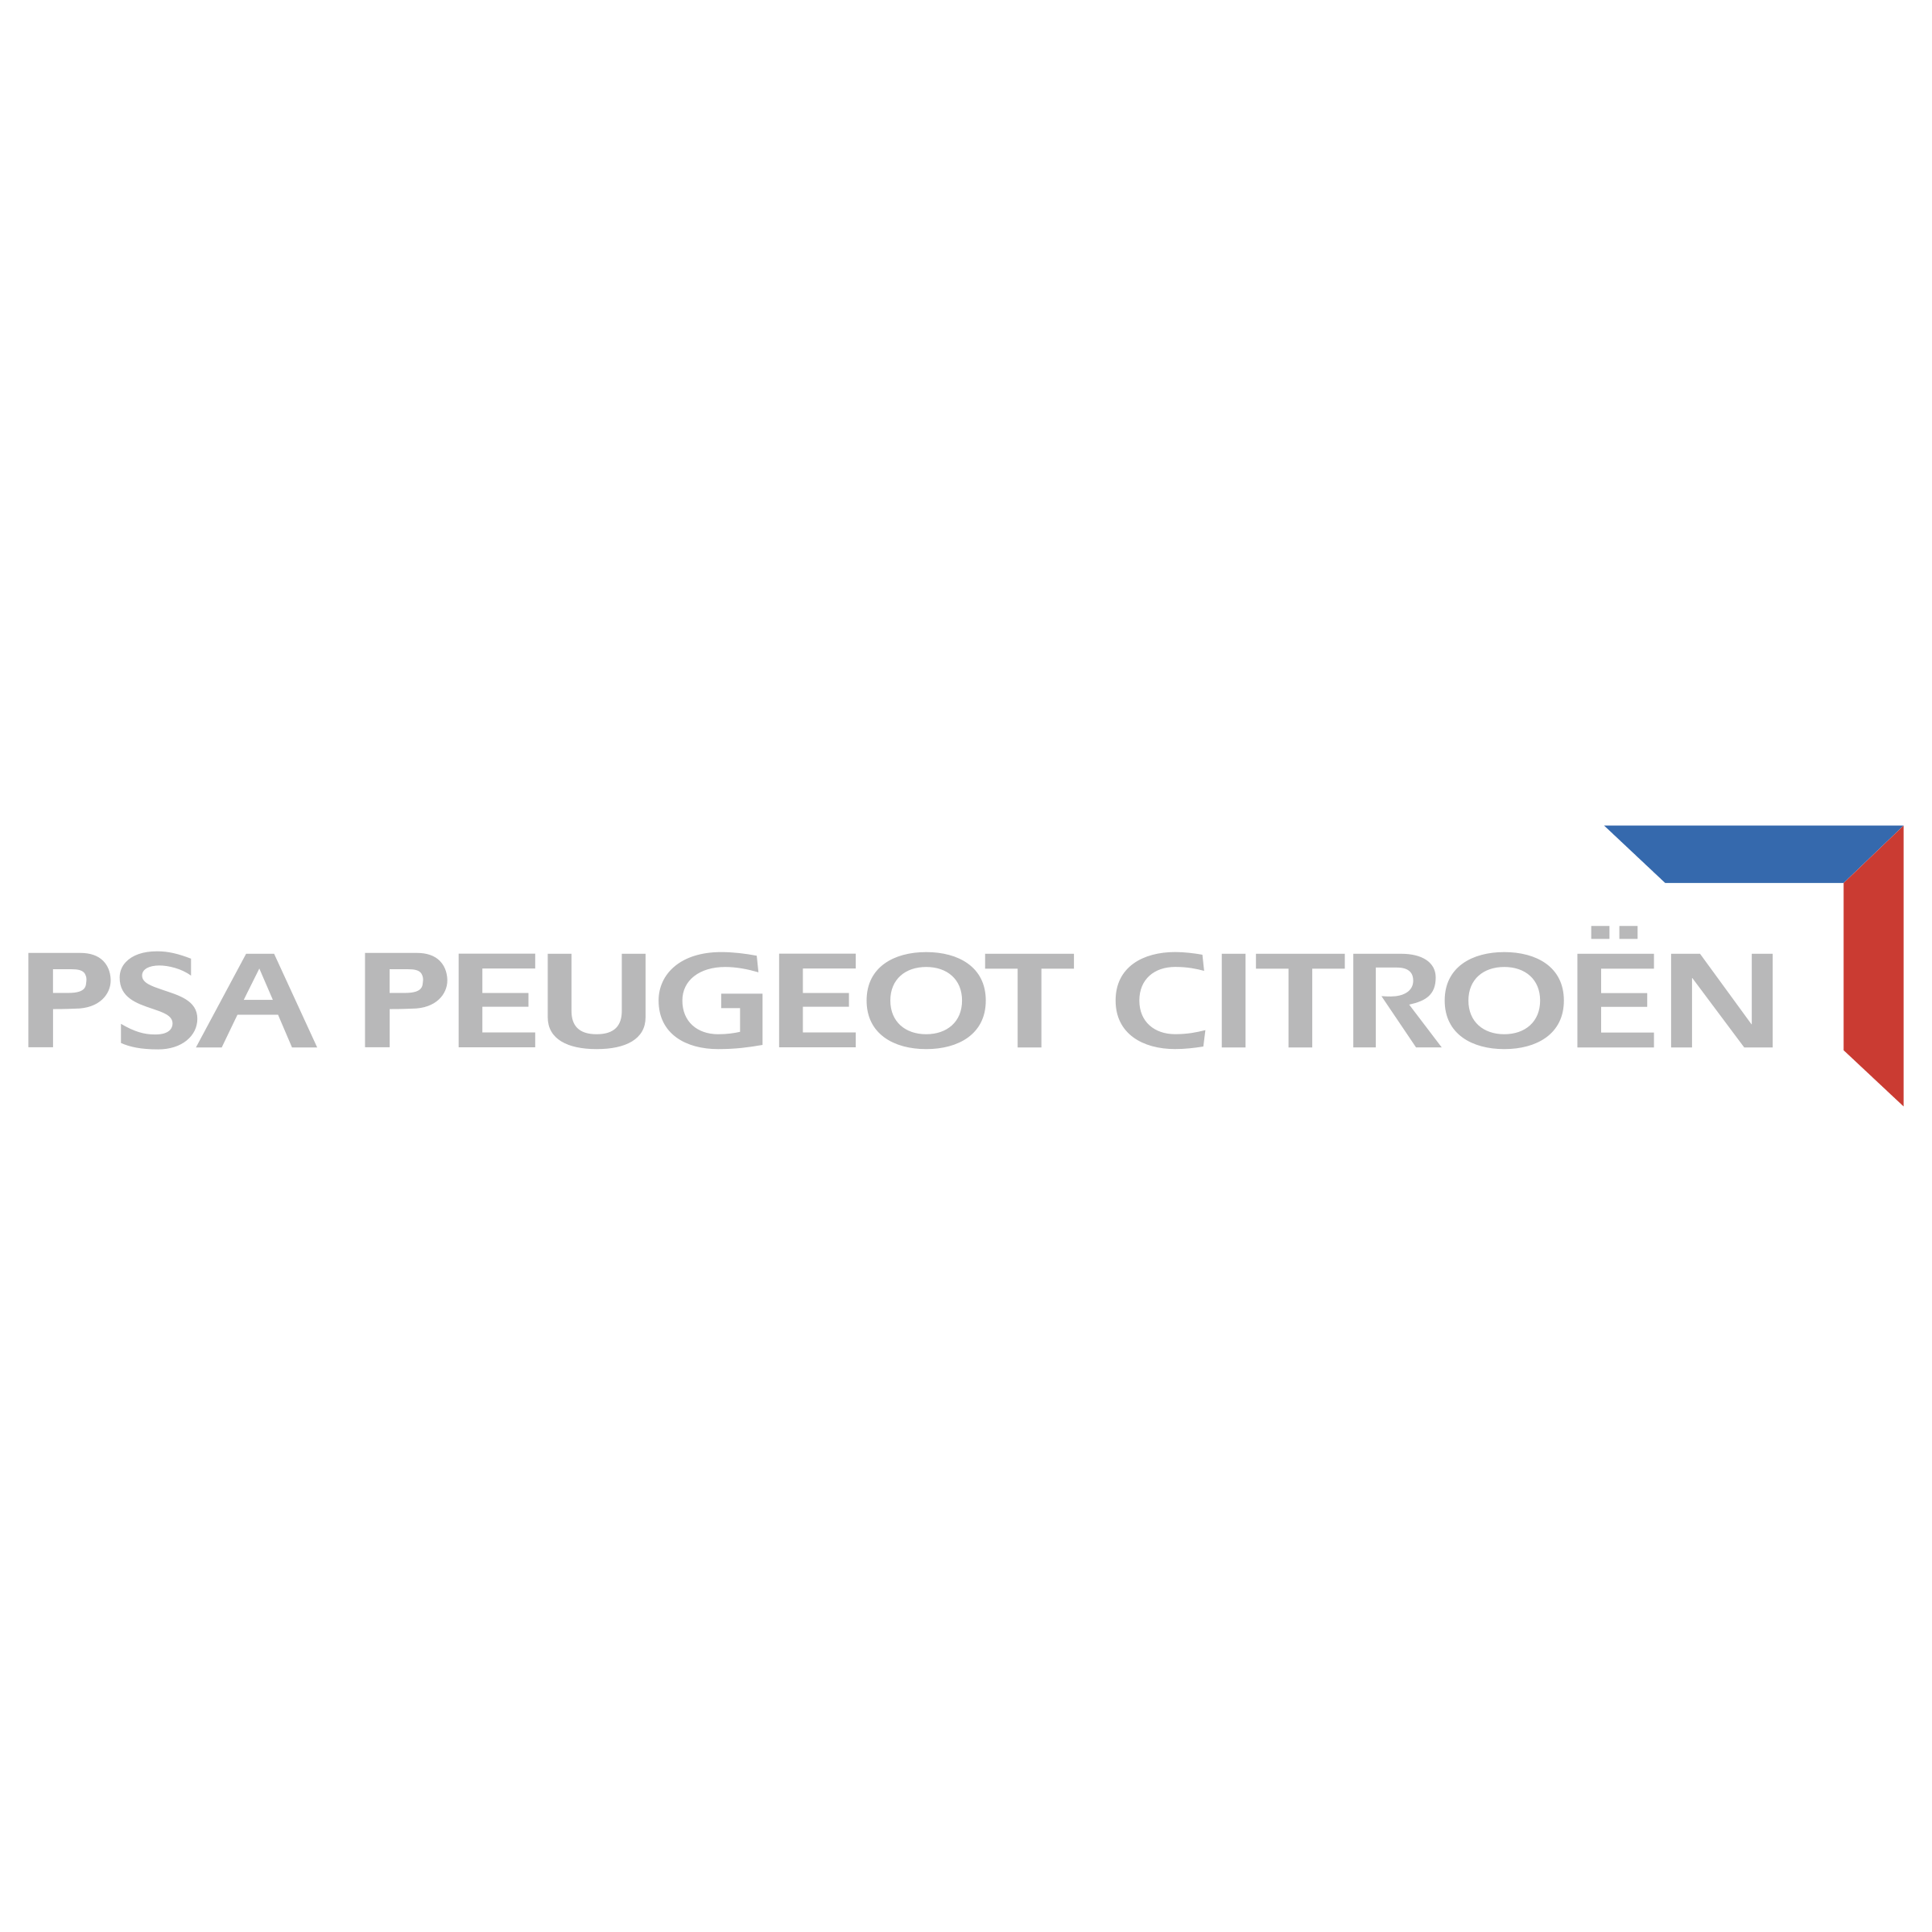 PSA Logo - PSA Peugeot Citroen Logo PNG Transparent & SVG Vector